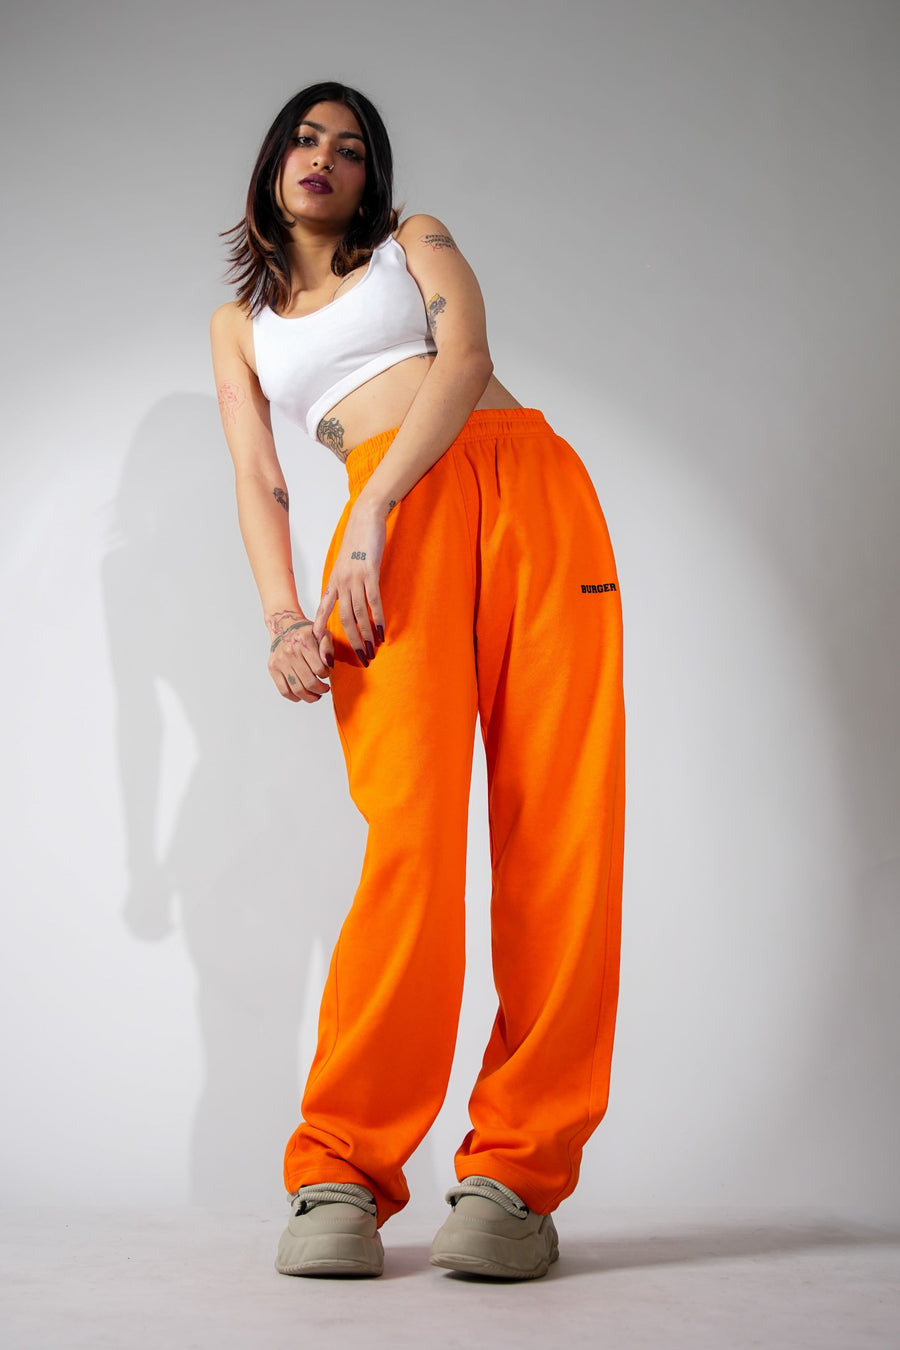 Irish Track Pants Bright Orange For Men and Women